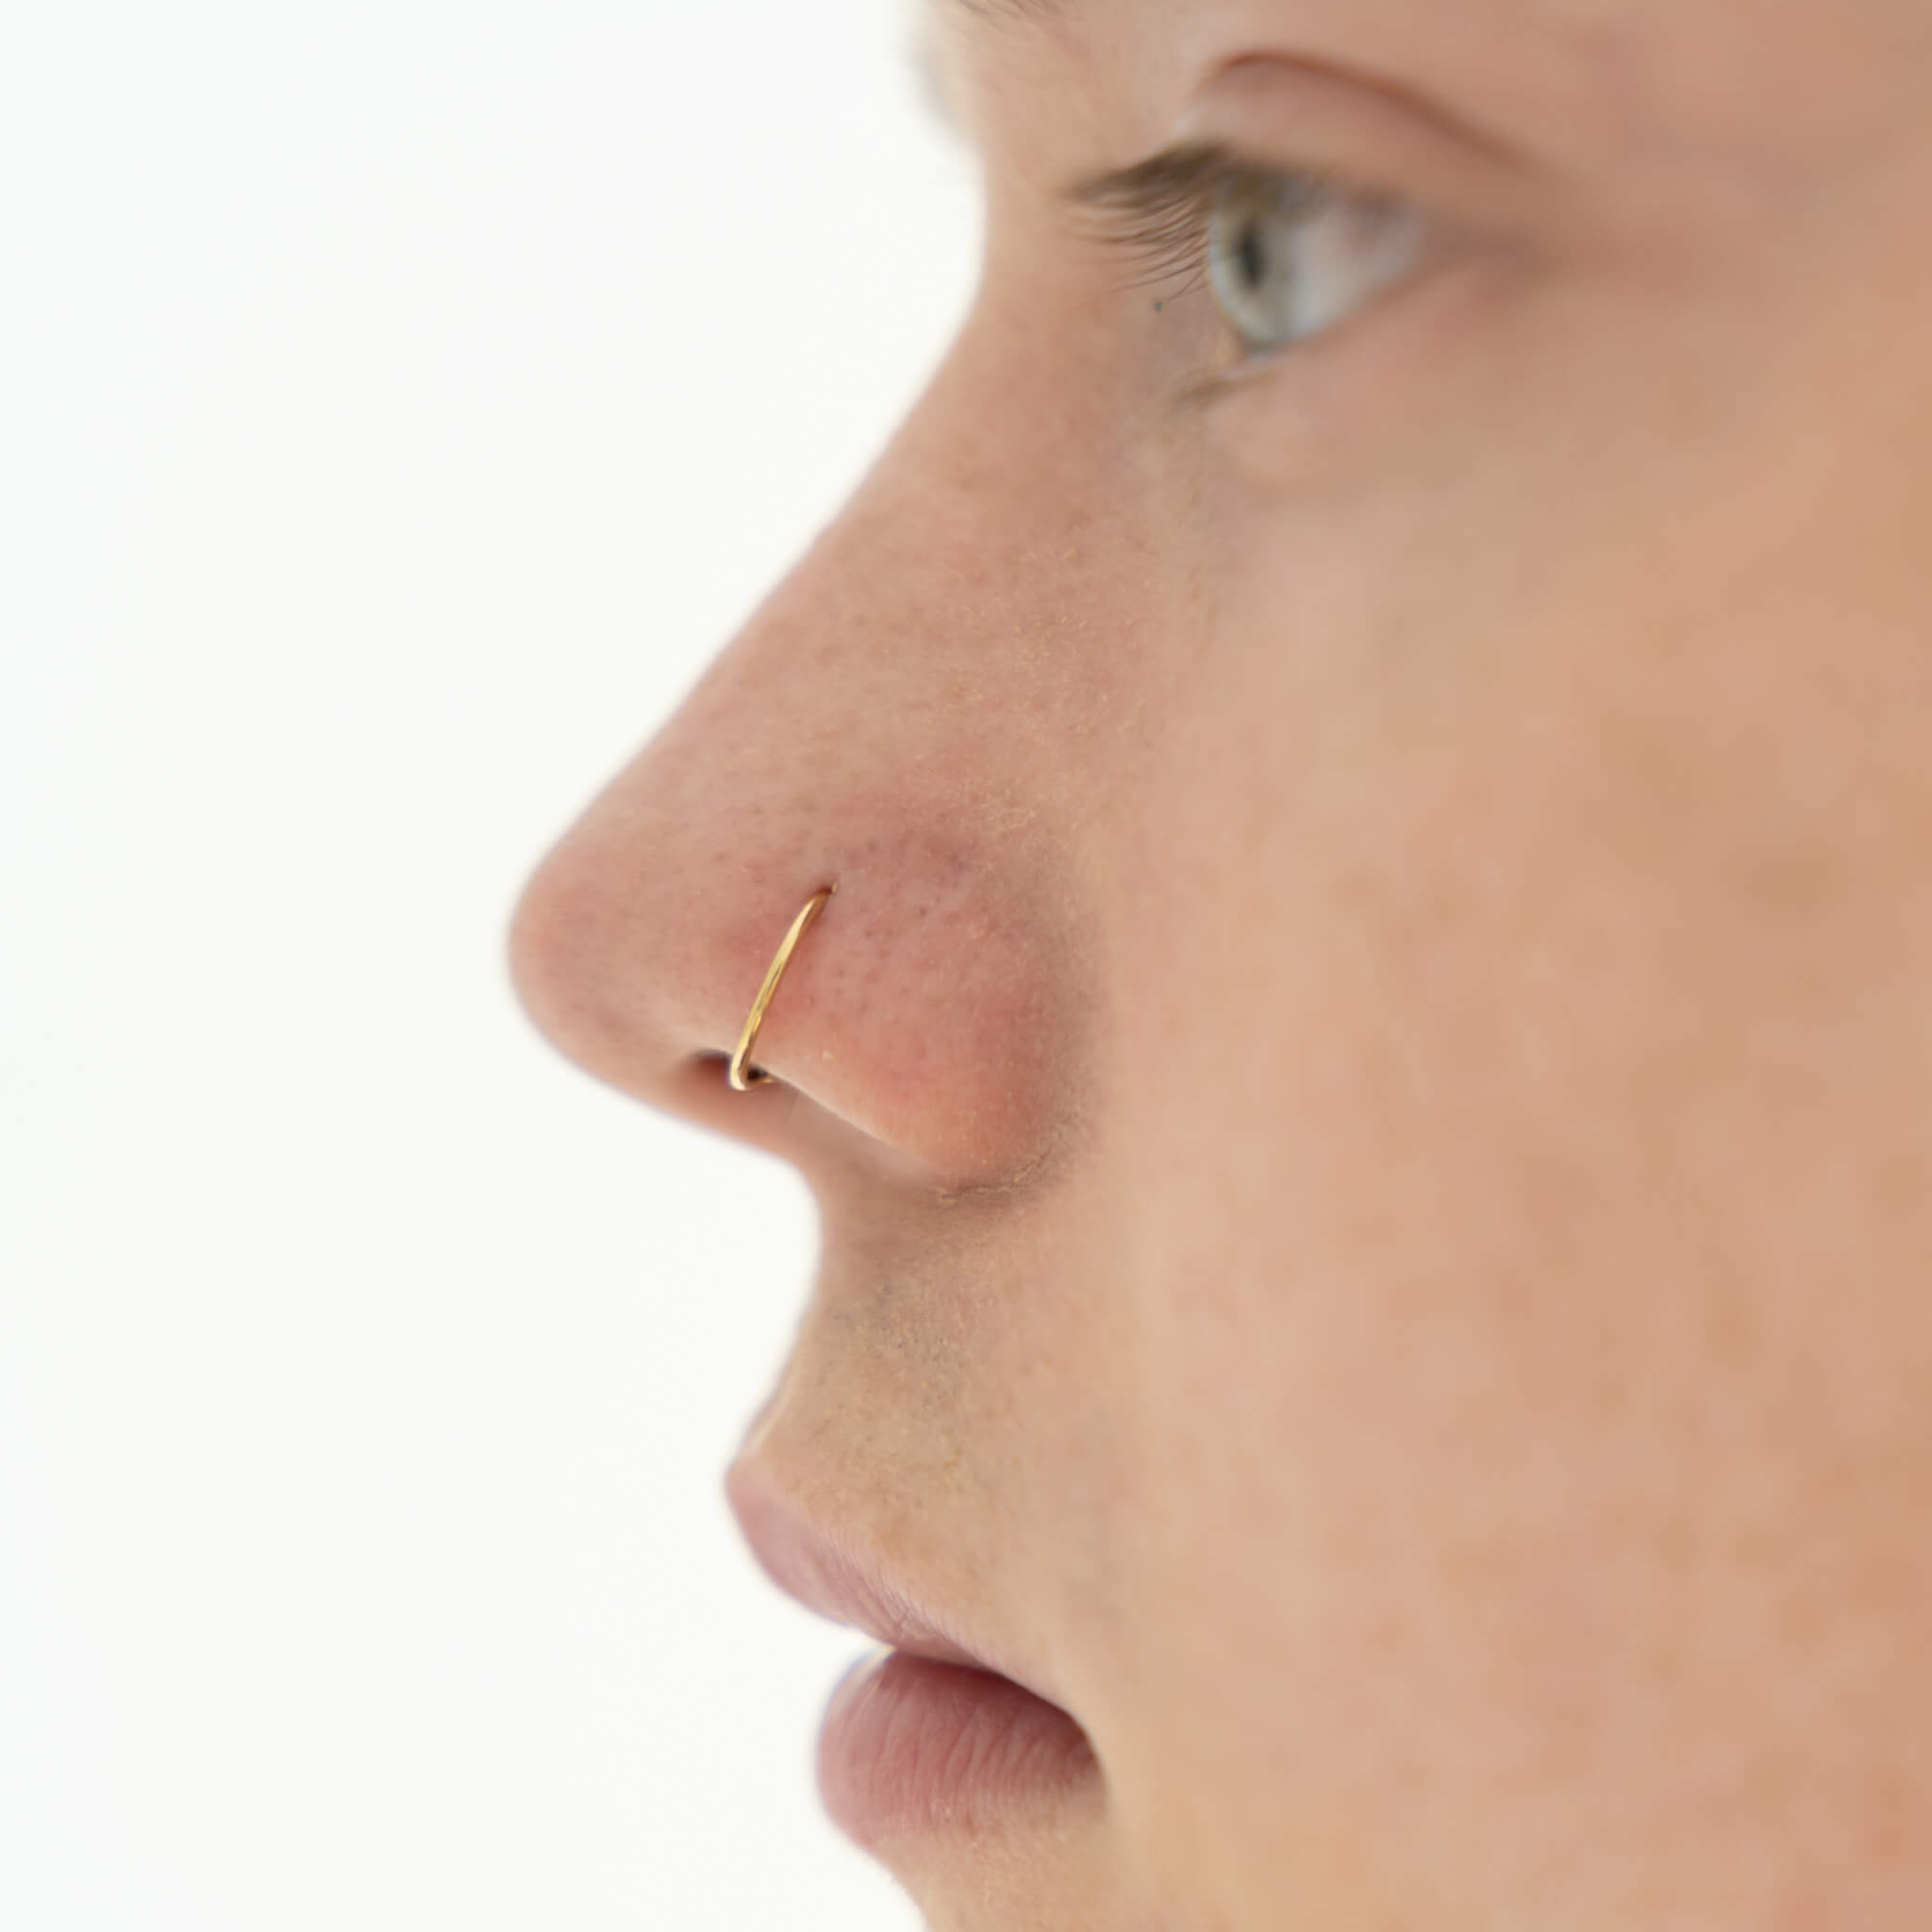 Tiny Secret Nose Hoop Ring in 14k Gold on model